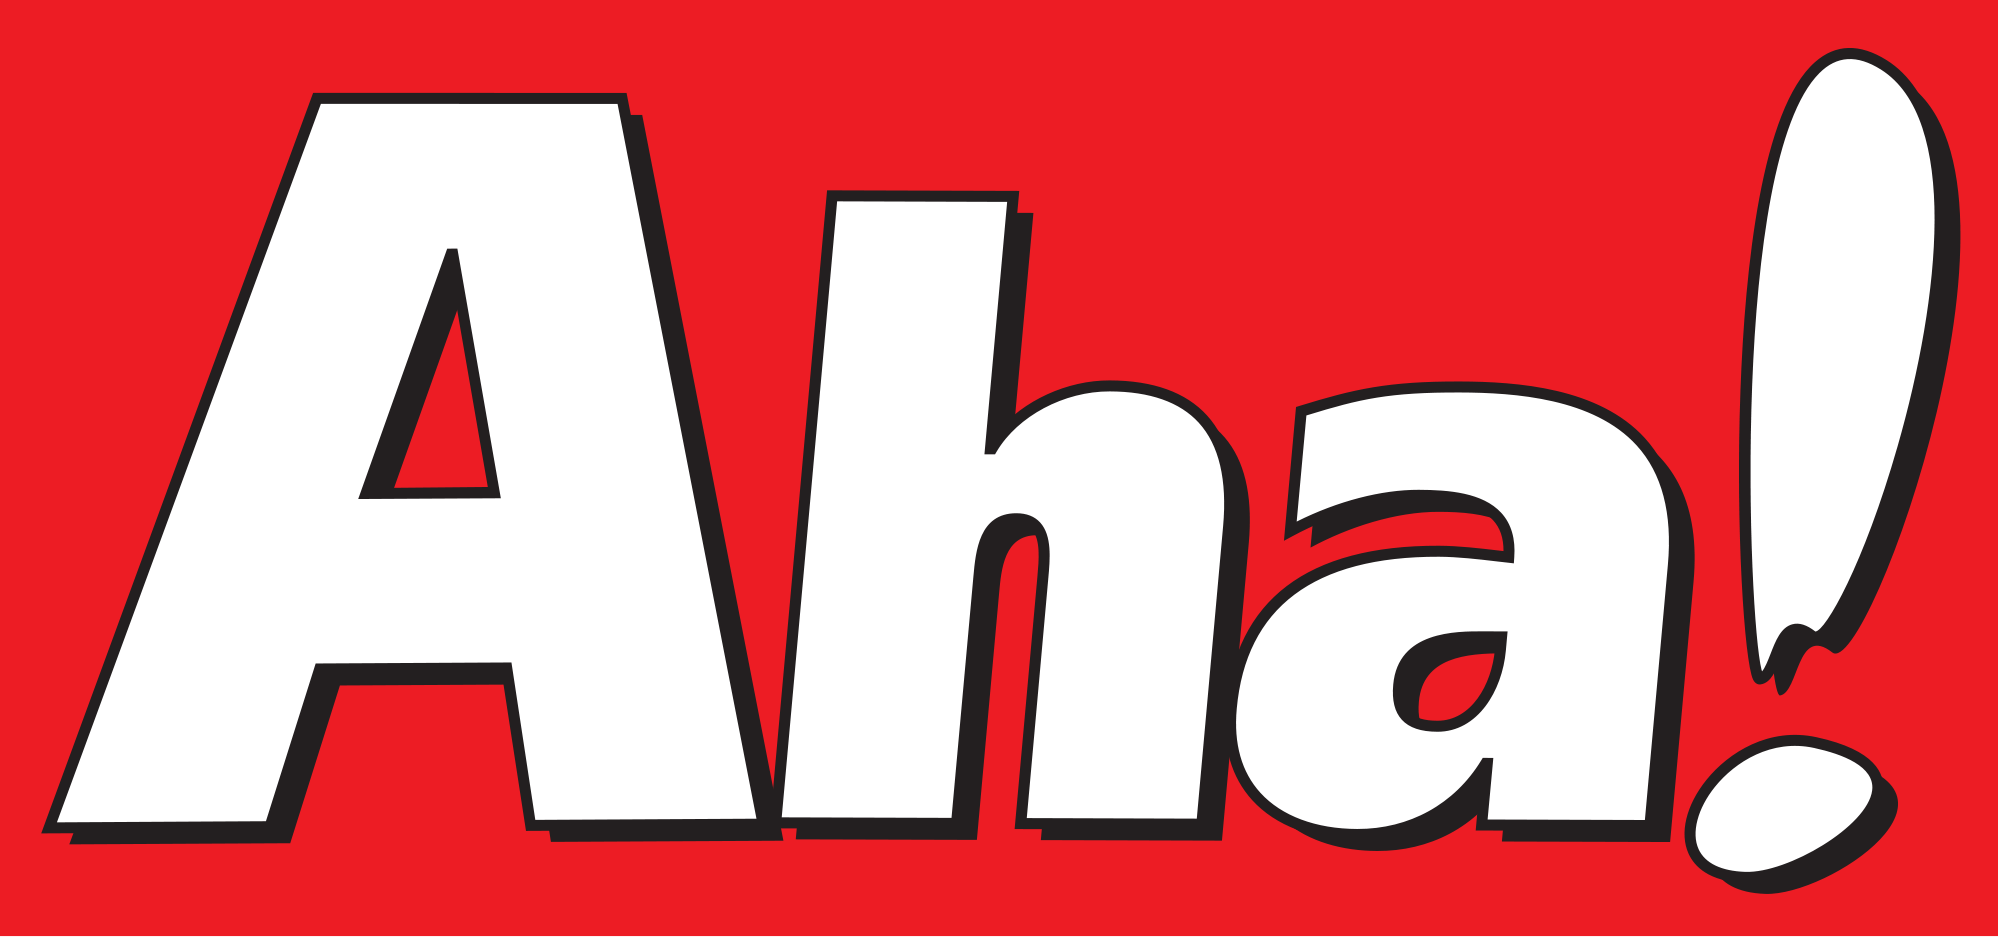 AHA Logo - File:Aha logo.svg - Wikimedia Commons